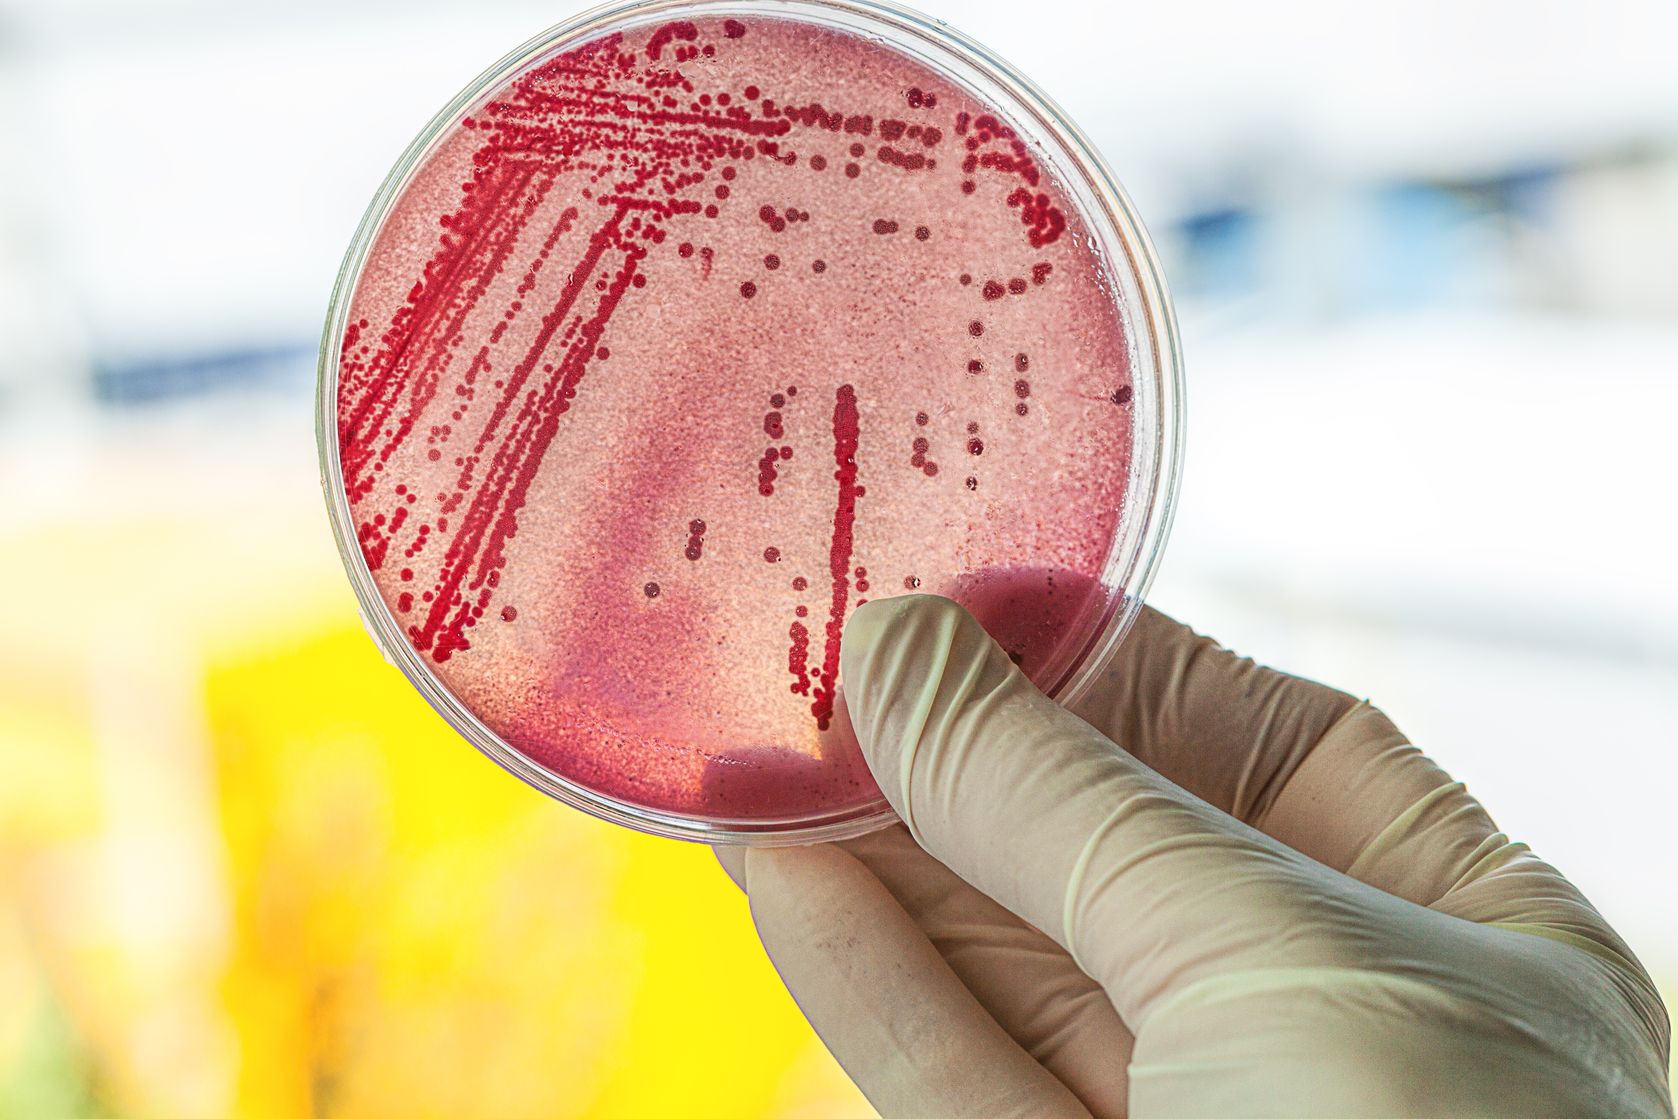 Petri dish showing cultured bacteria